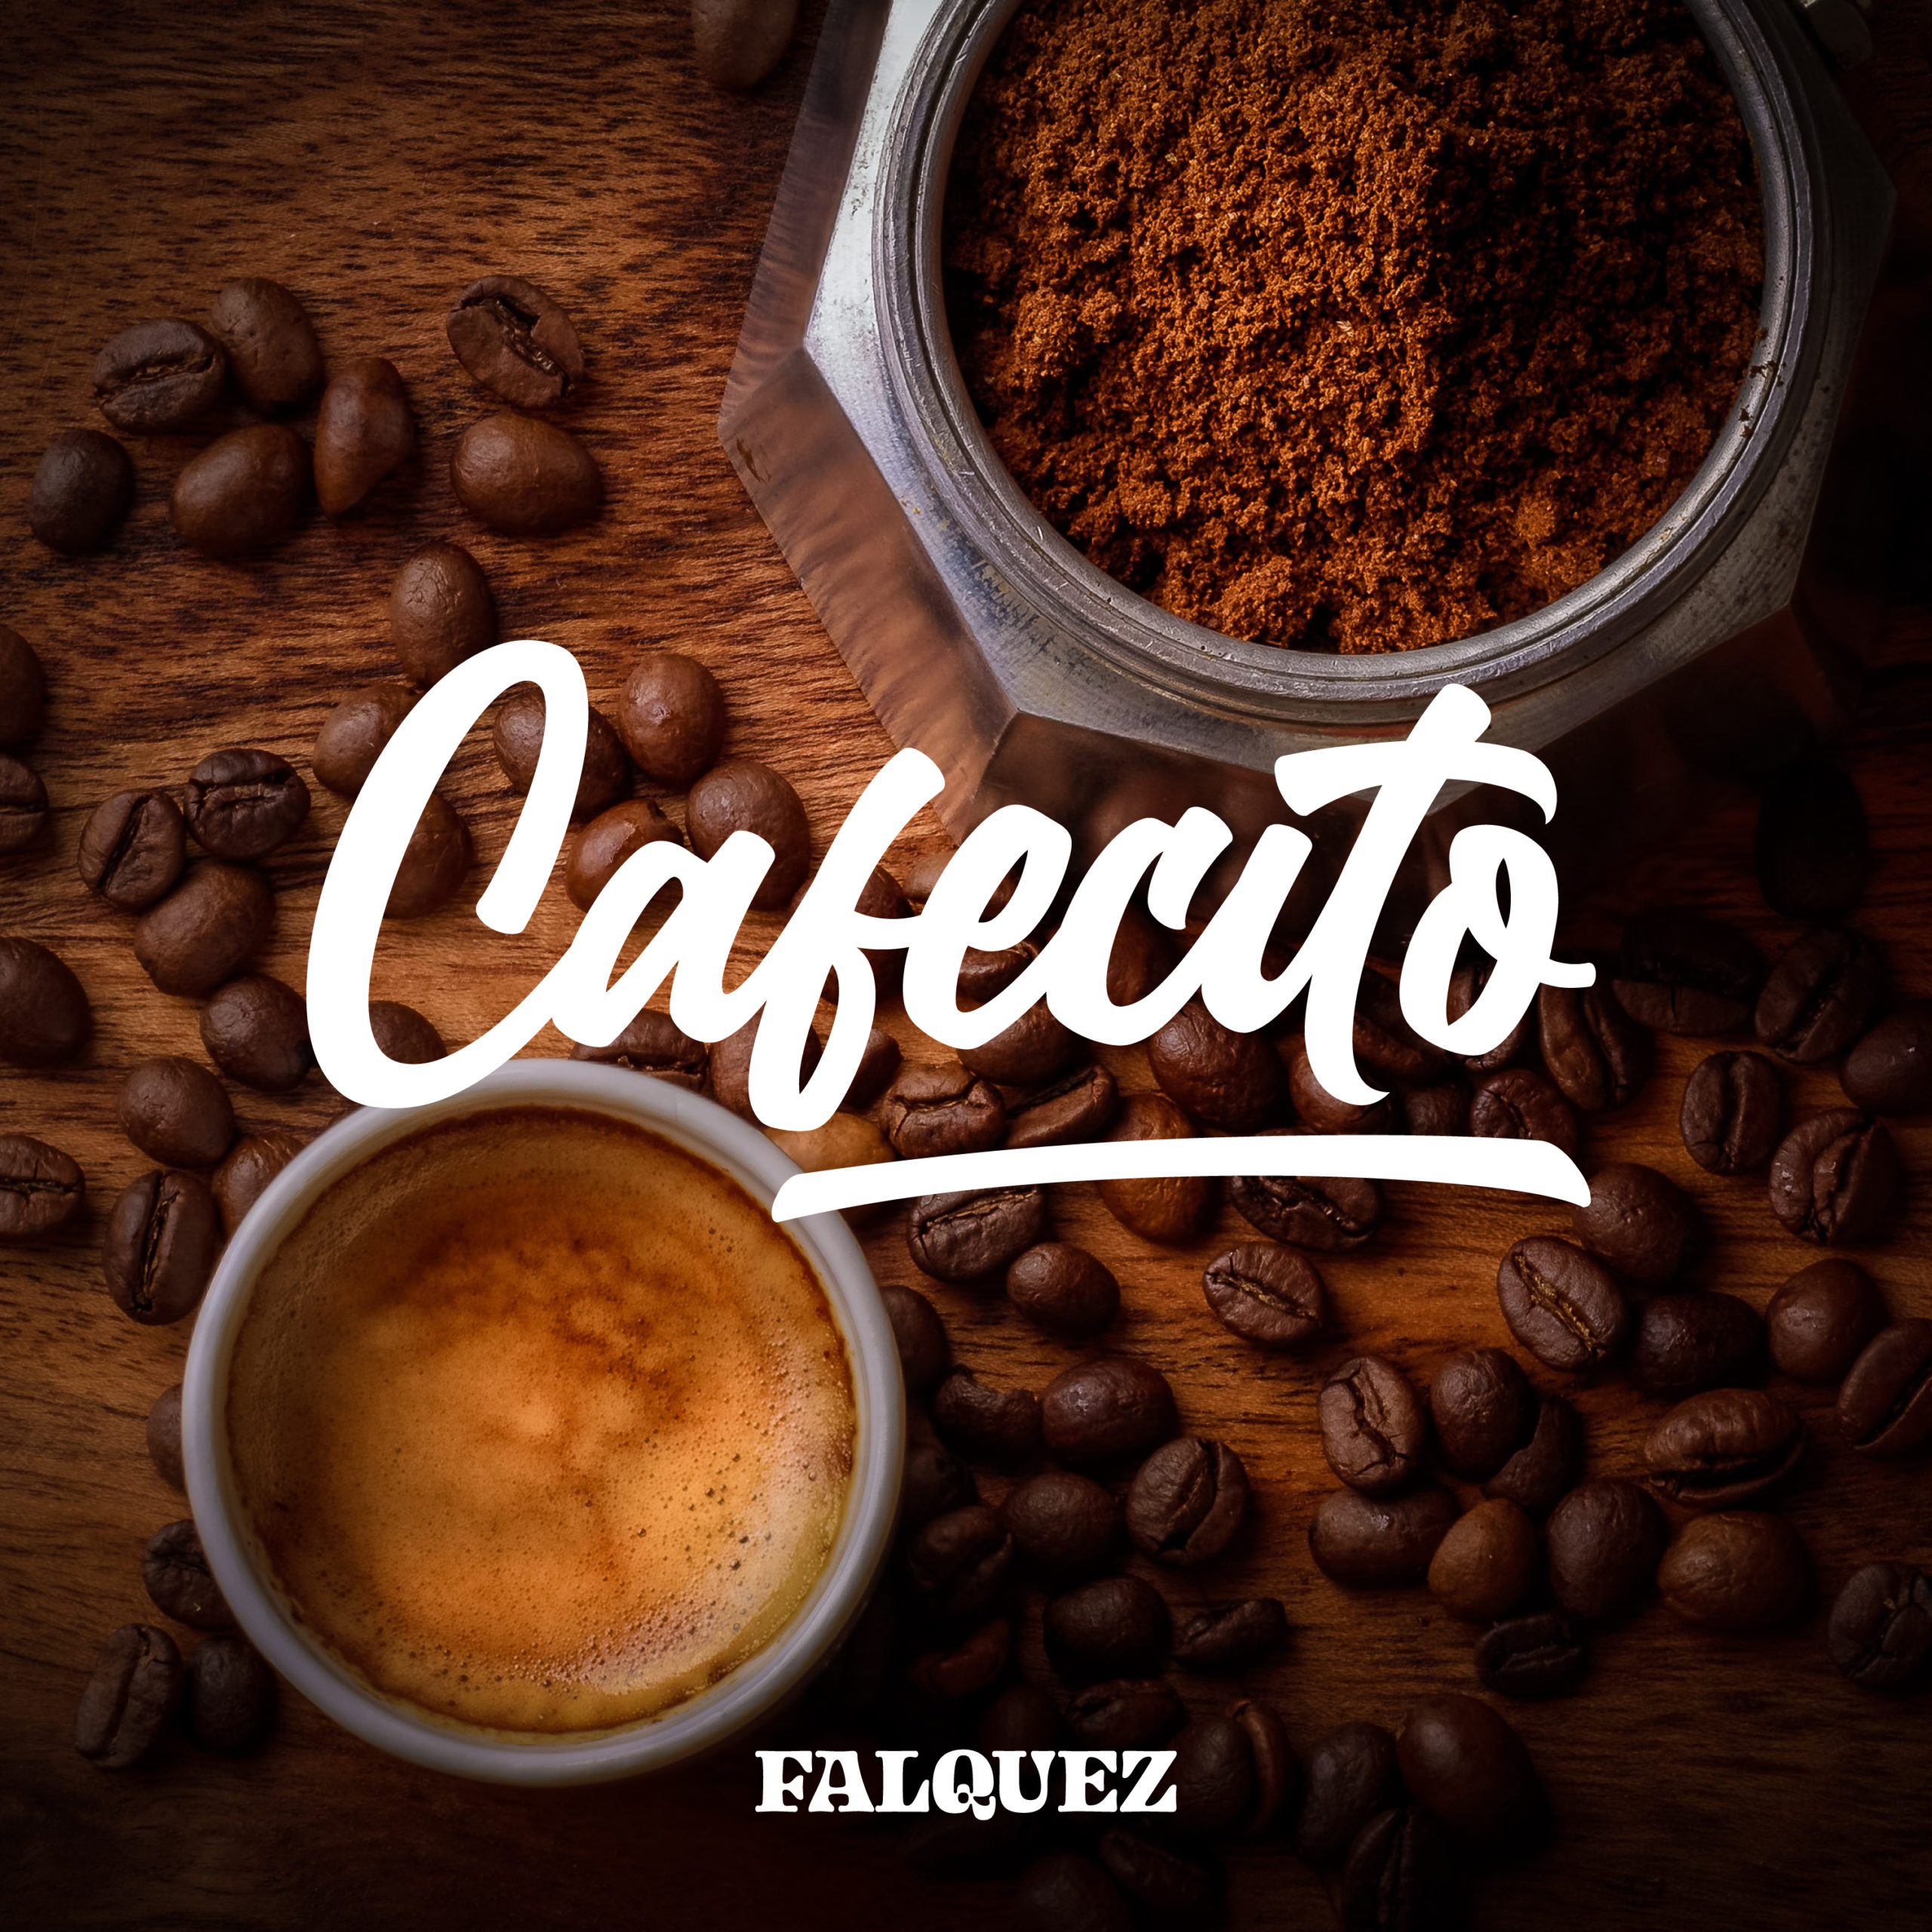 Falquez releases Cafecito, the Latin jazz soundtrack to Miami’s Cuban coffee culture